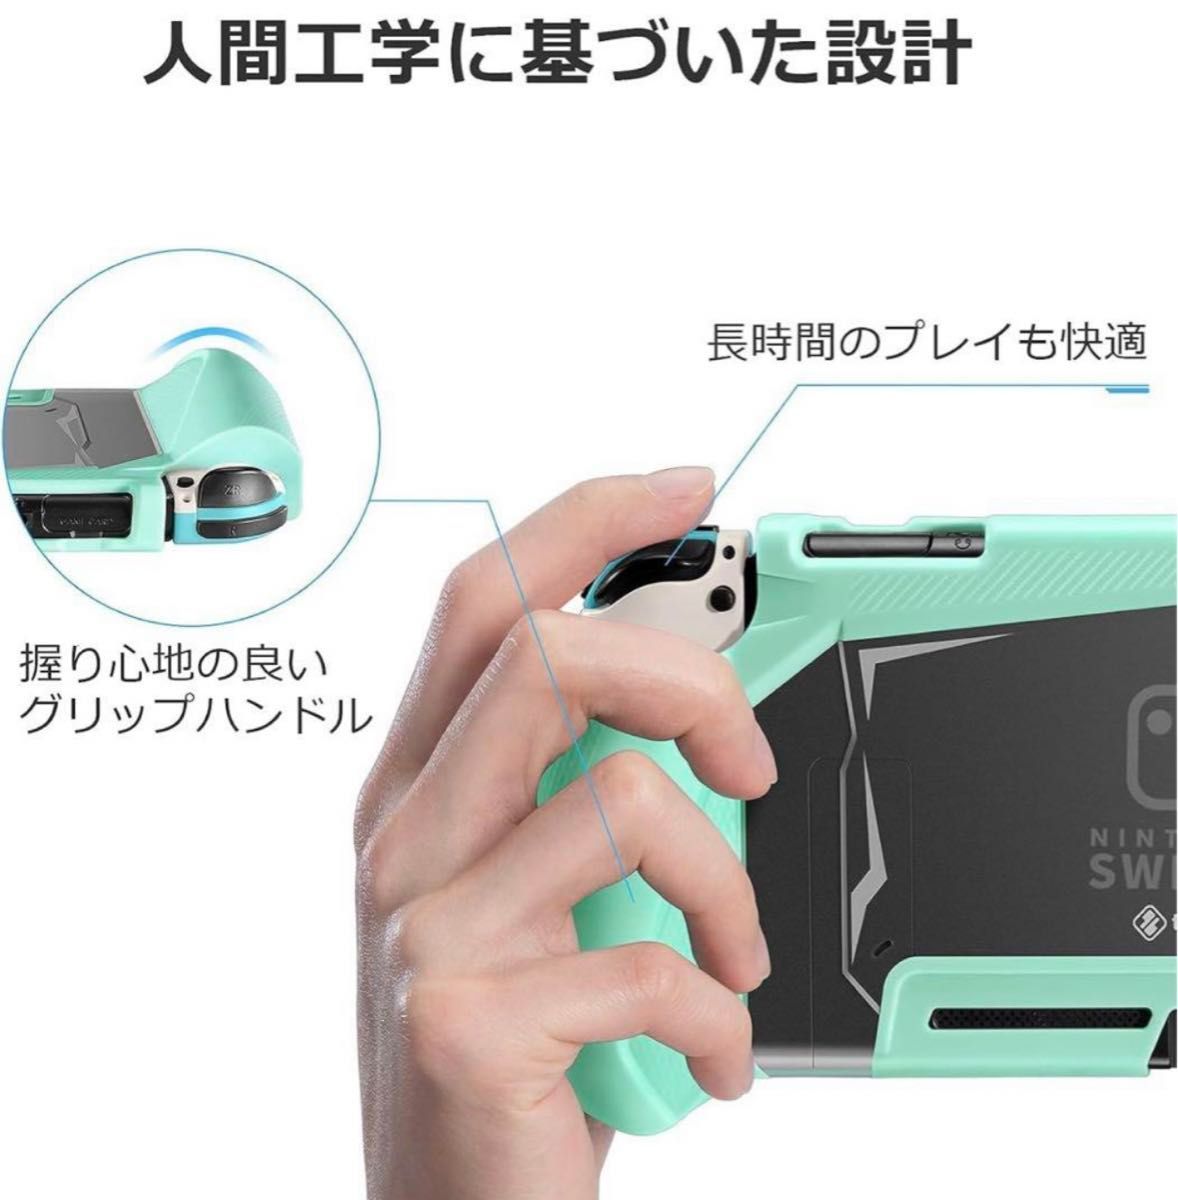 Nintendo Switch 対応 tomtoc グリップカバー